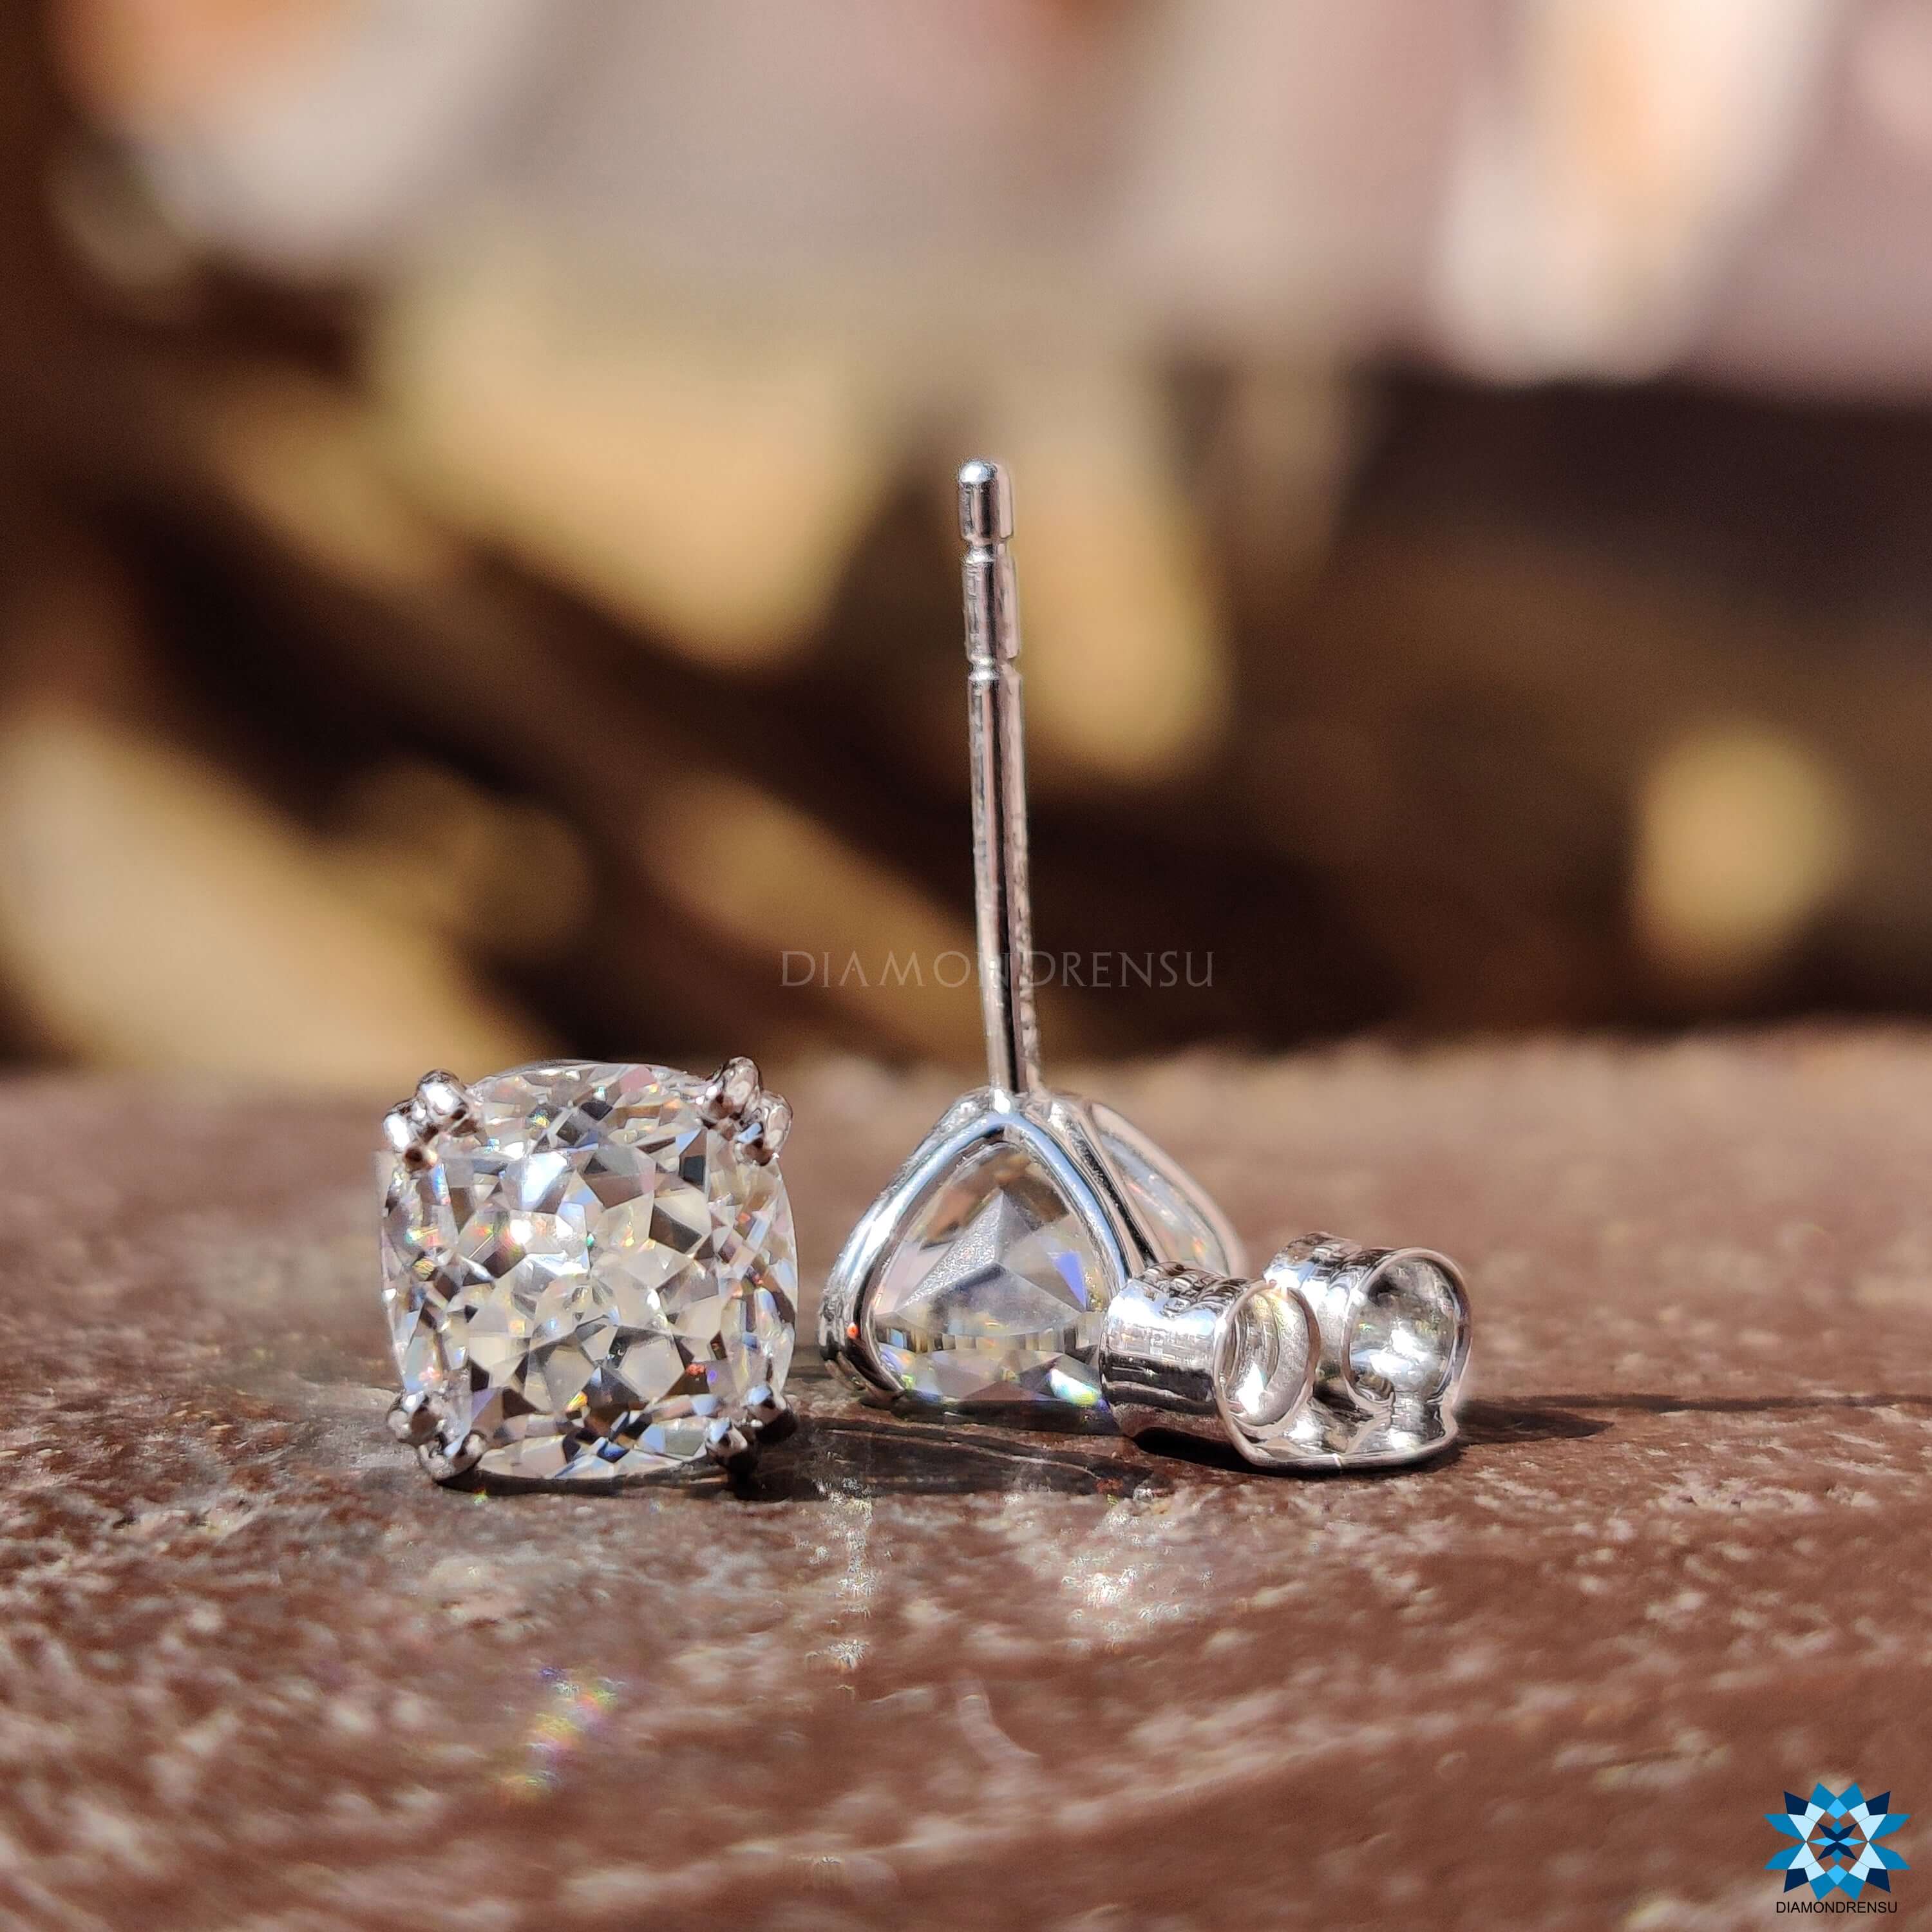 stud earrings - diamondrensu